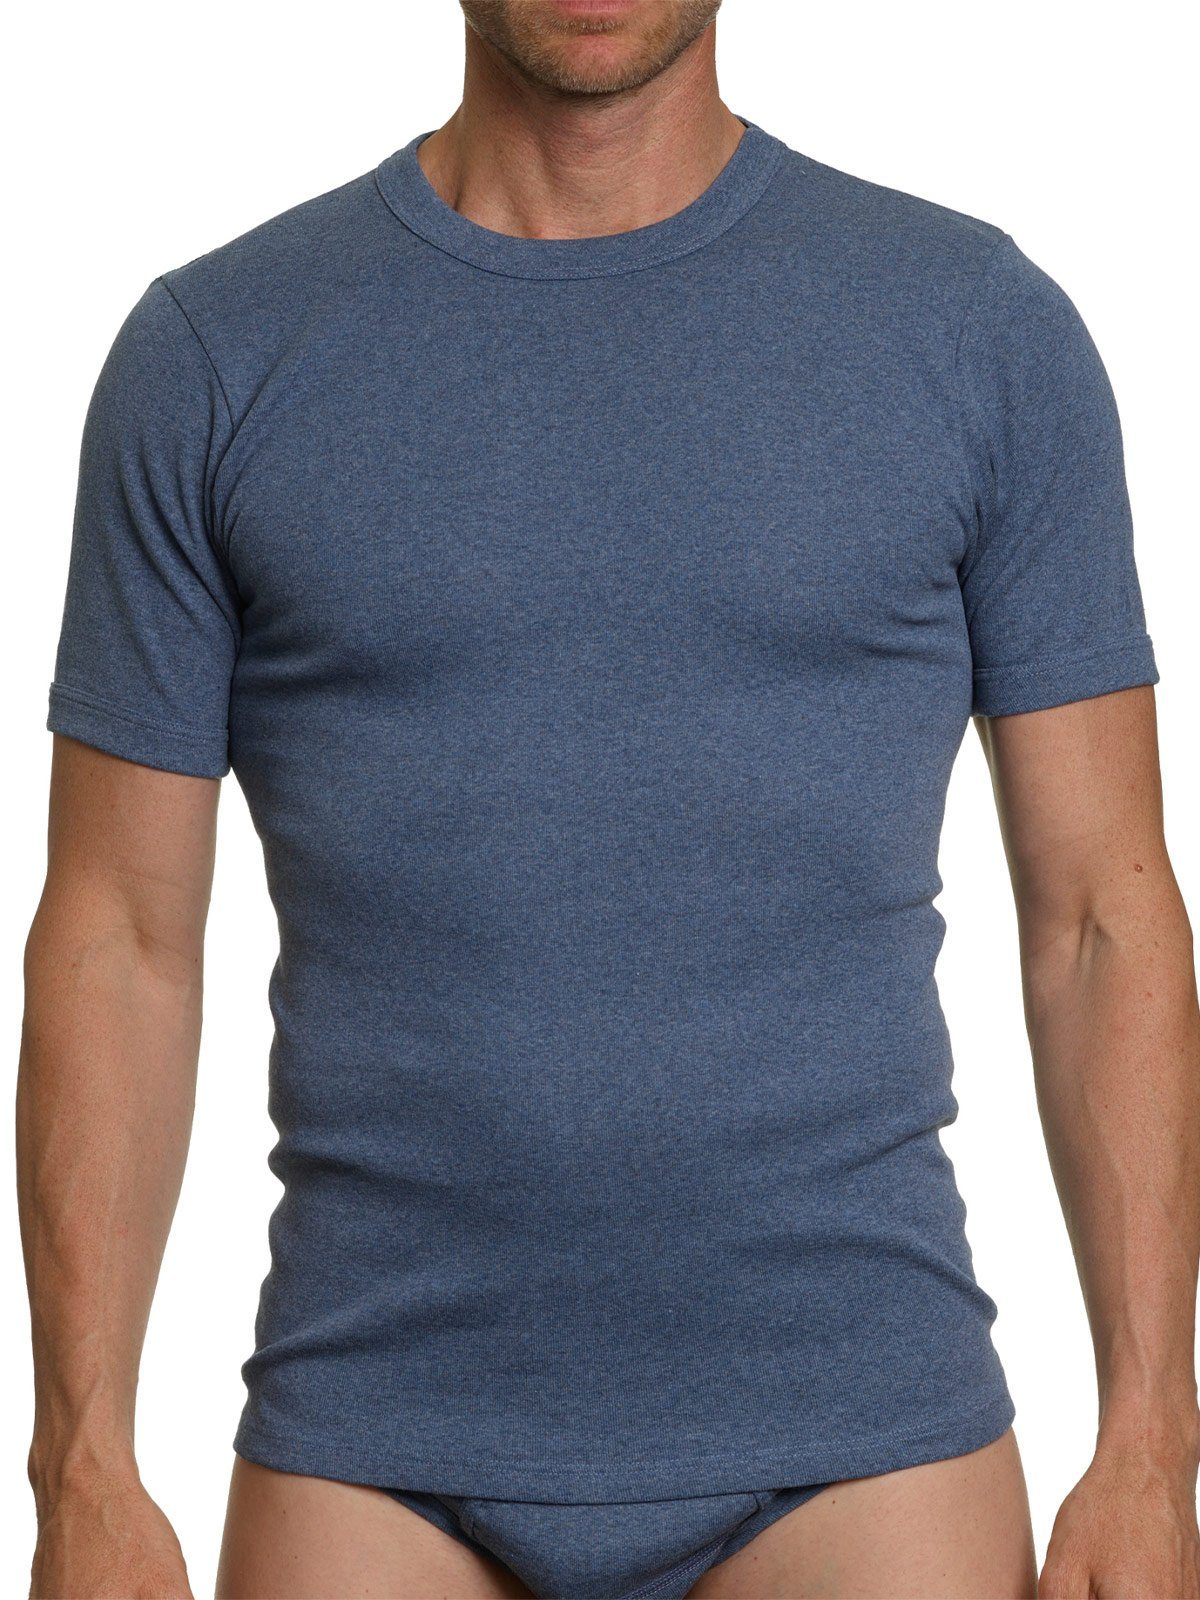 KUMPF Unterziehshirt Herren T-Shirt hohe Markenqualität 1-St) Arm 1/2 (Stück, blau-melange Workerwear